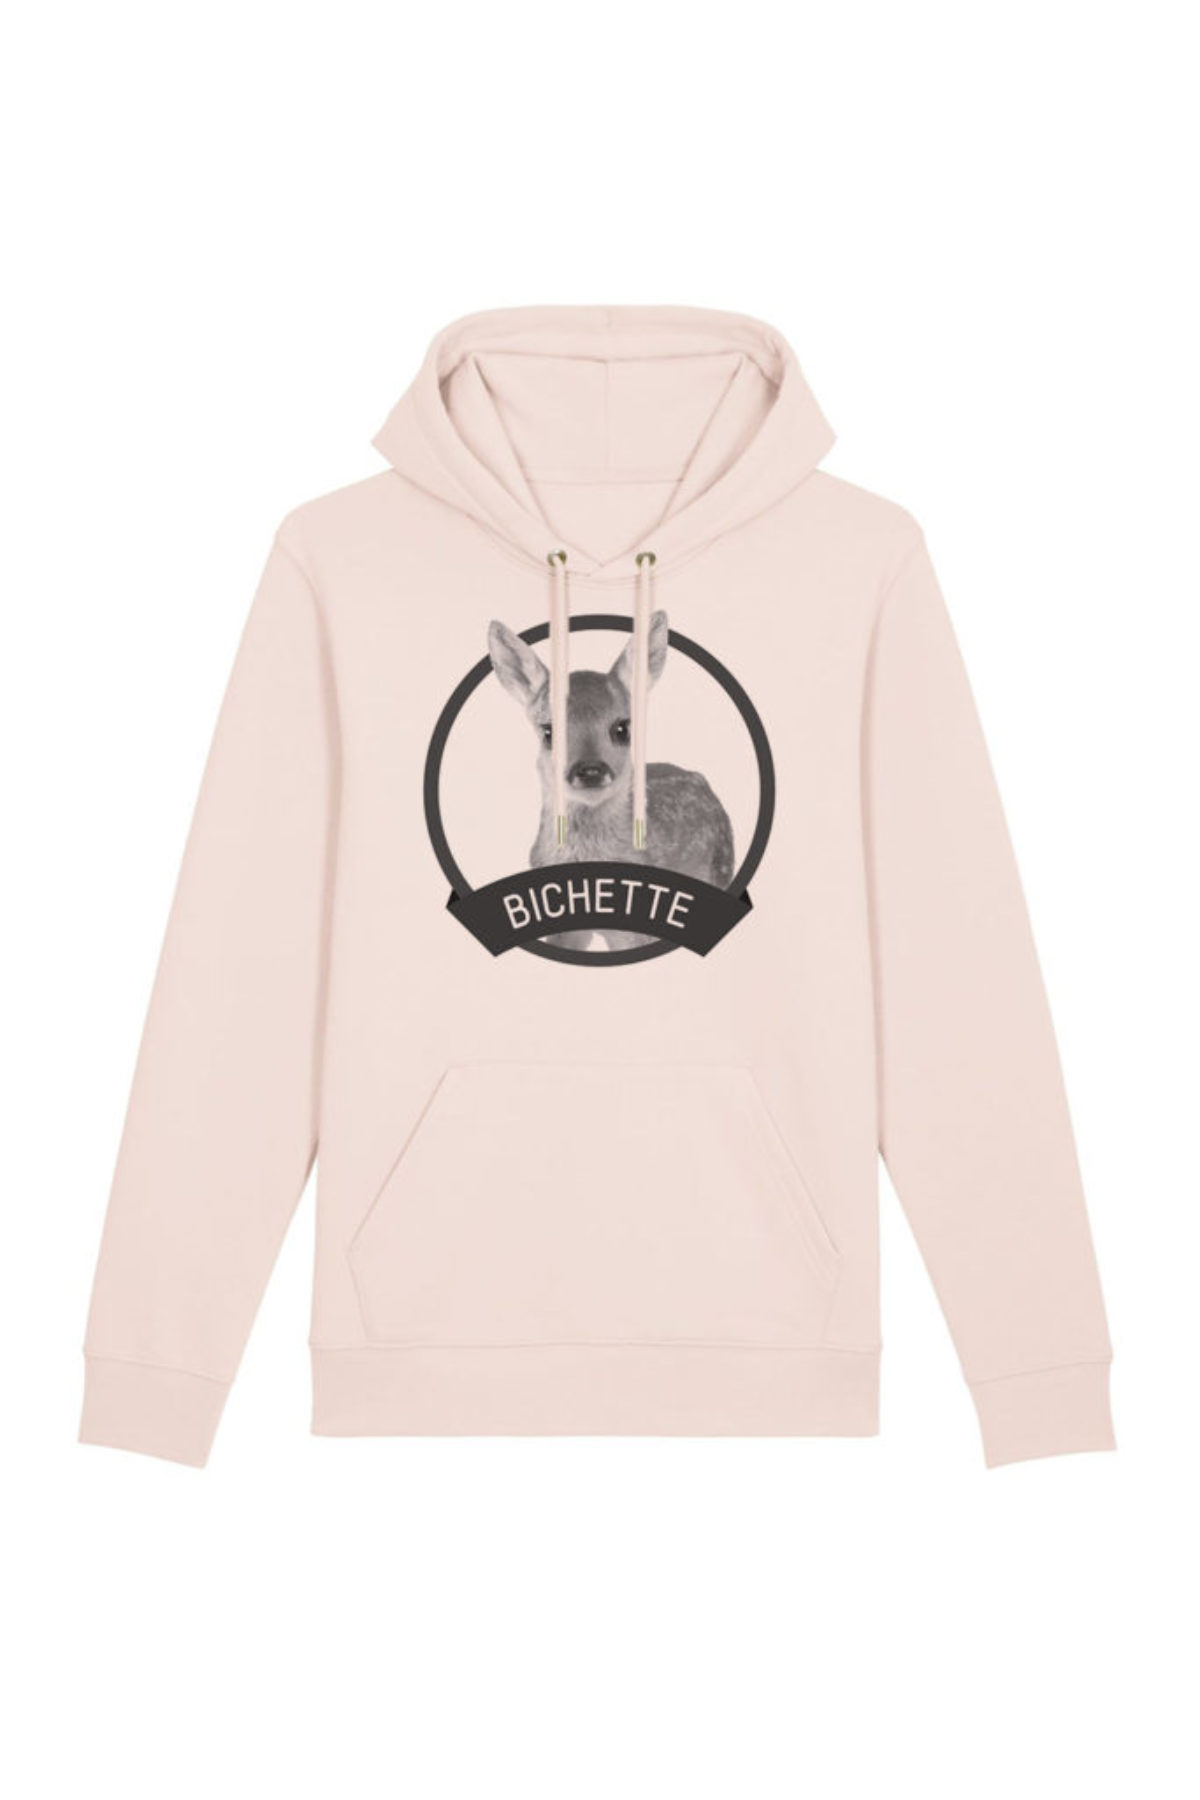 Sweatshirt capuche adulte - Bichette